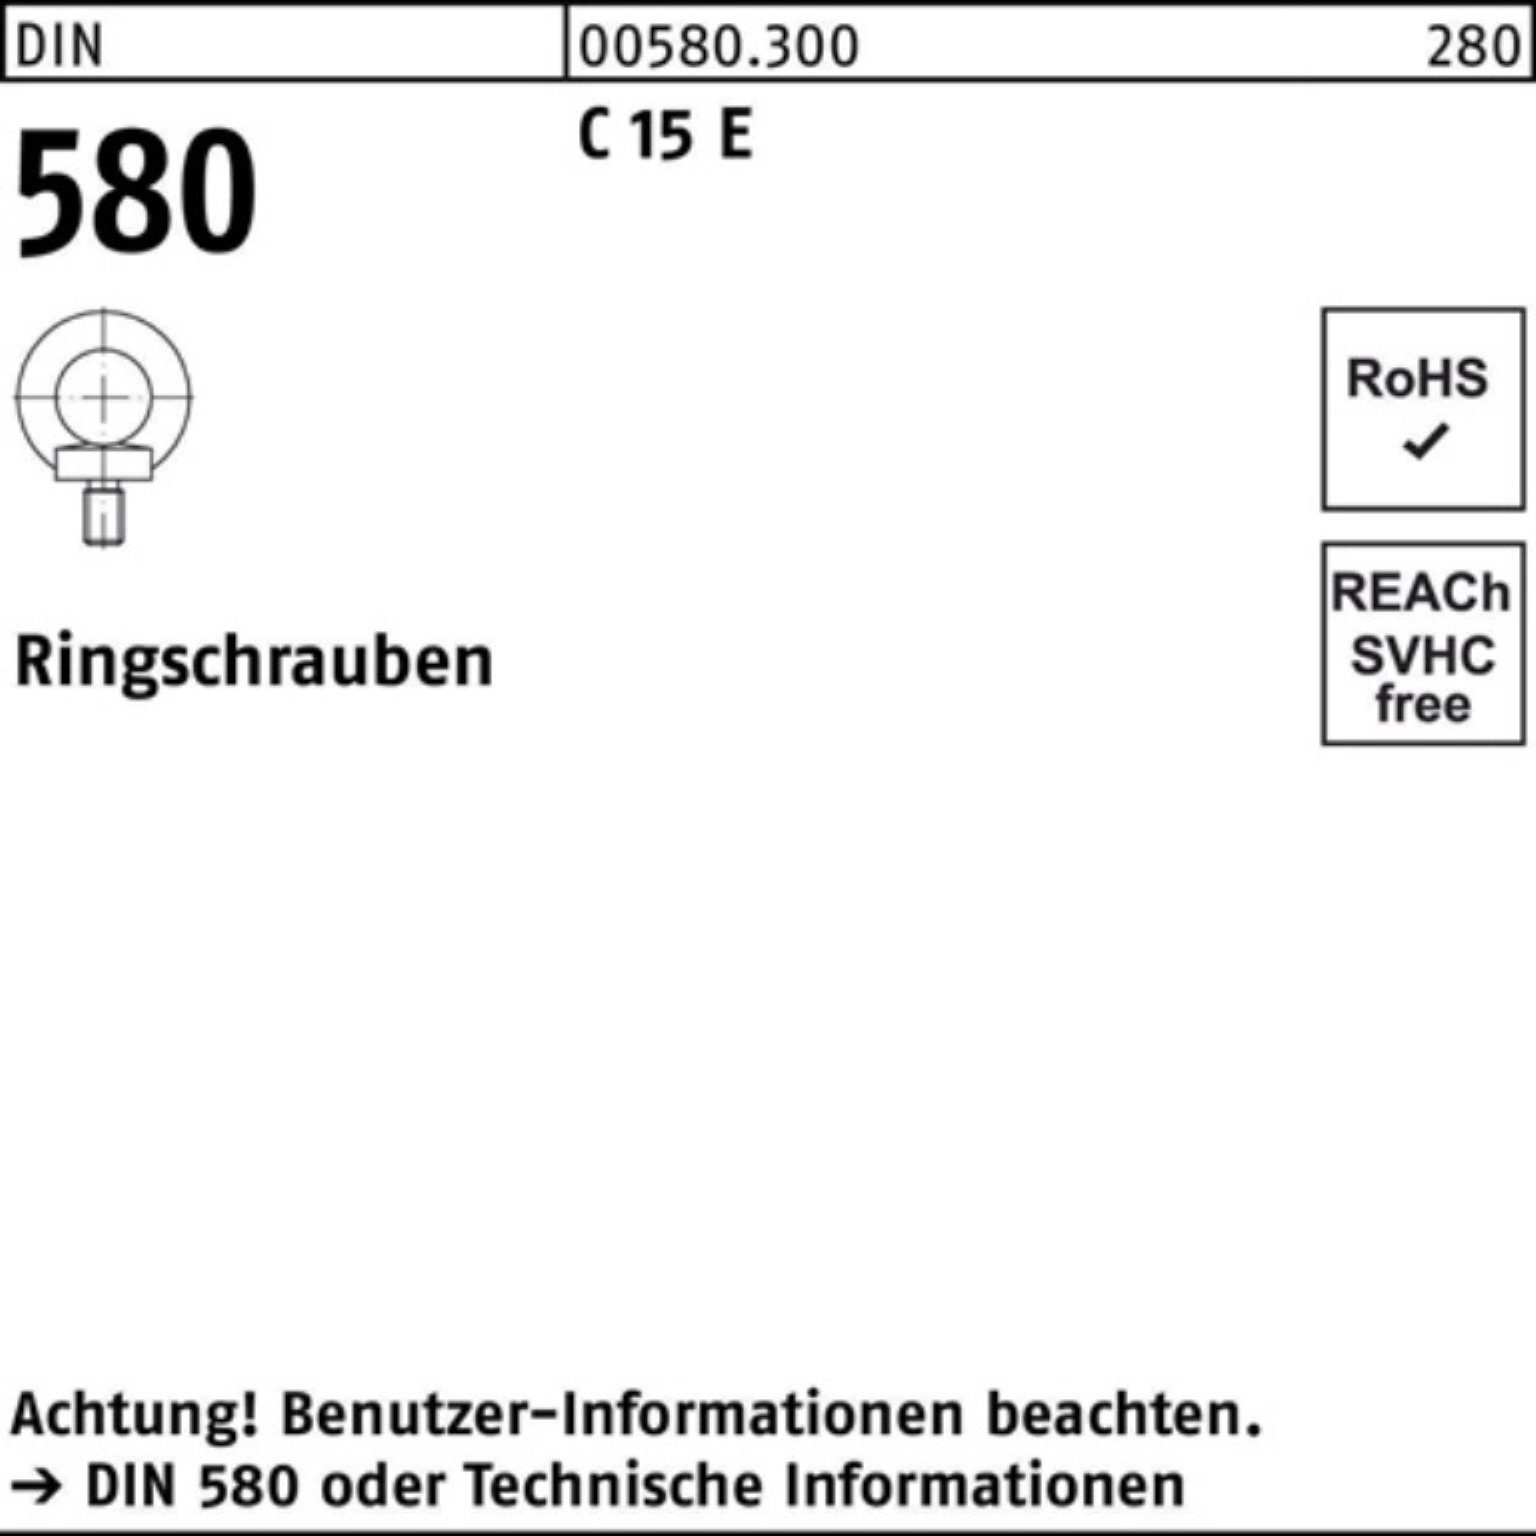 Reyher Schraube 100er Pack Ringschraube DIN 580 Stück 580 C 15 C 1 M45 Rin DIN E E 15